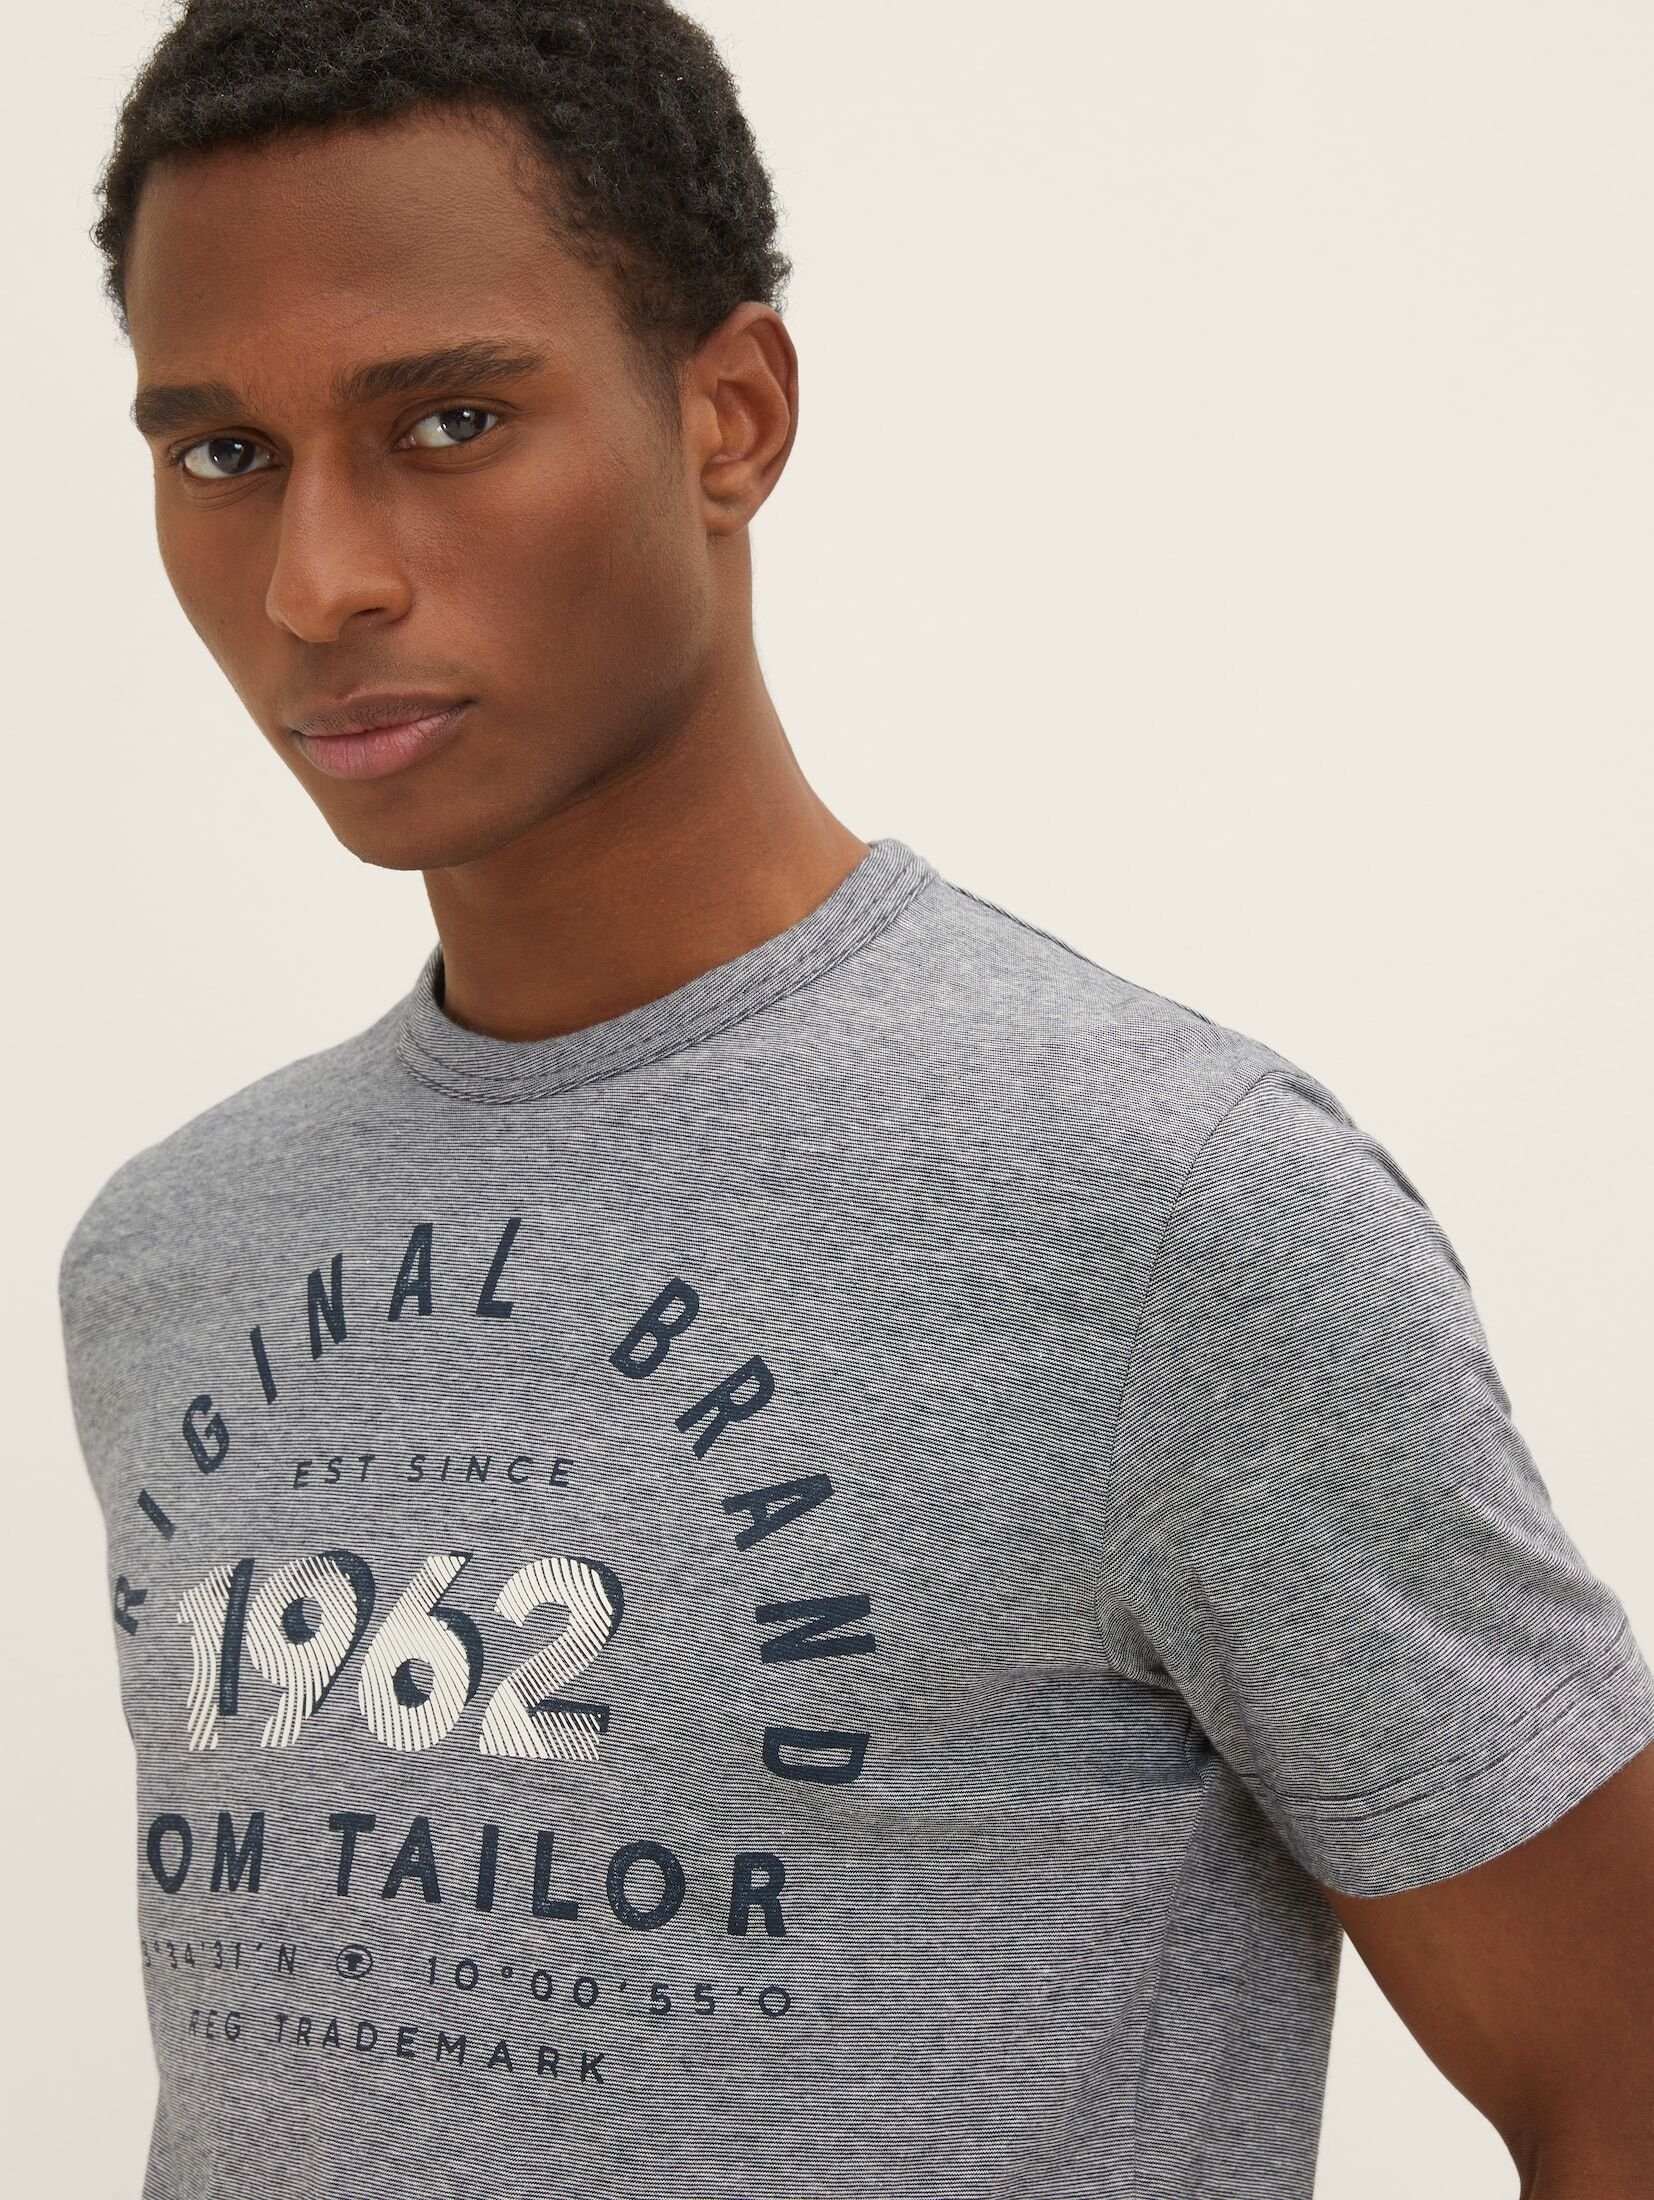 TOM TAILOR T-Shirt mit T-Shirt offwhite navy thin stripe Print